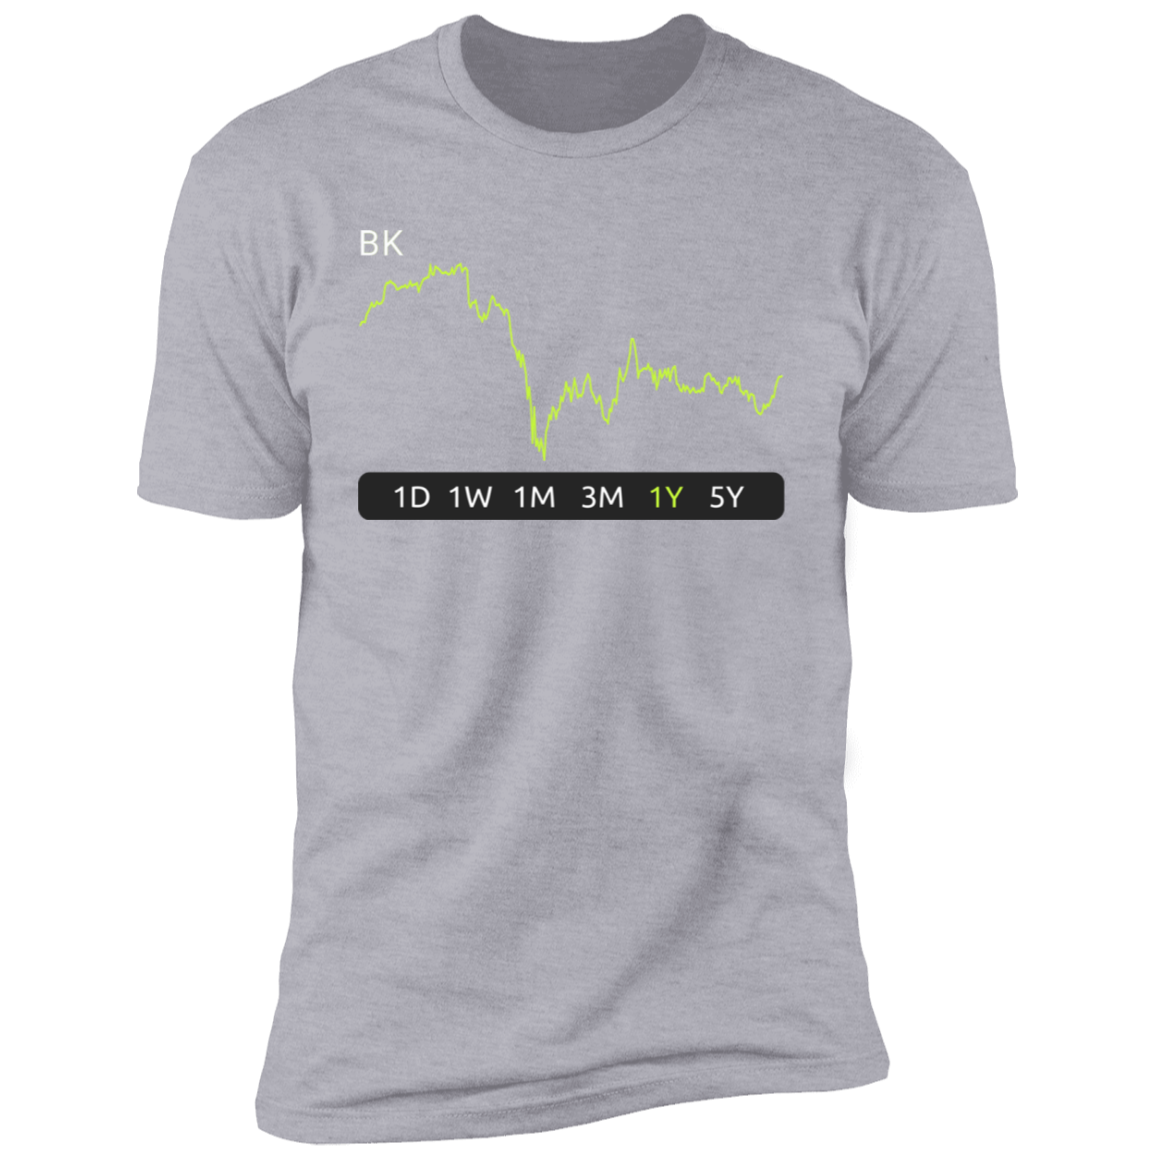 BK Stock 1y Premium T-Shirt